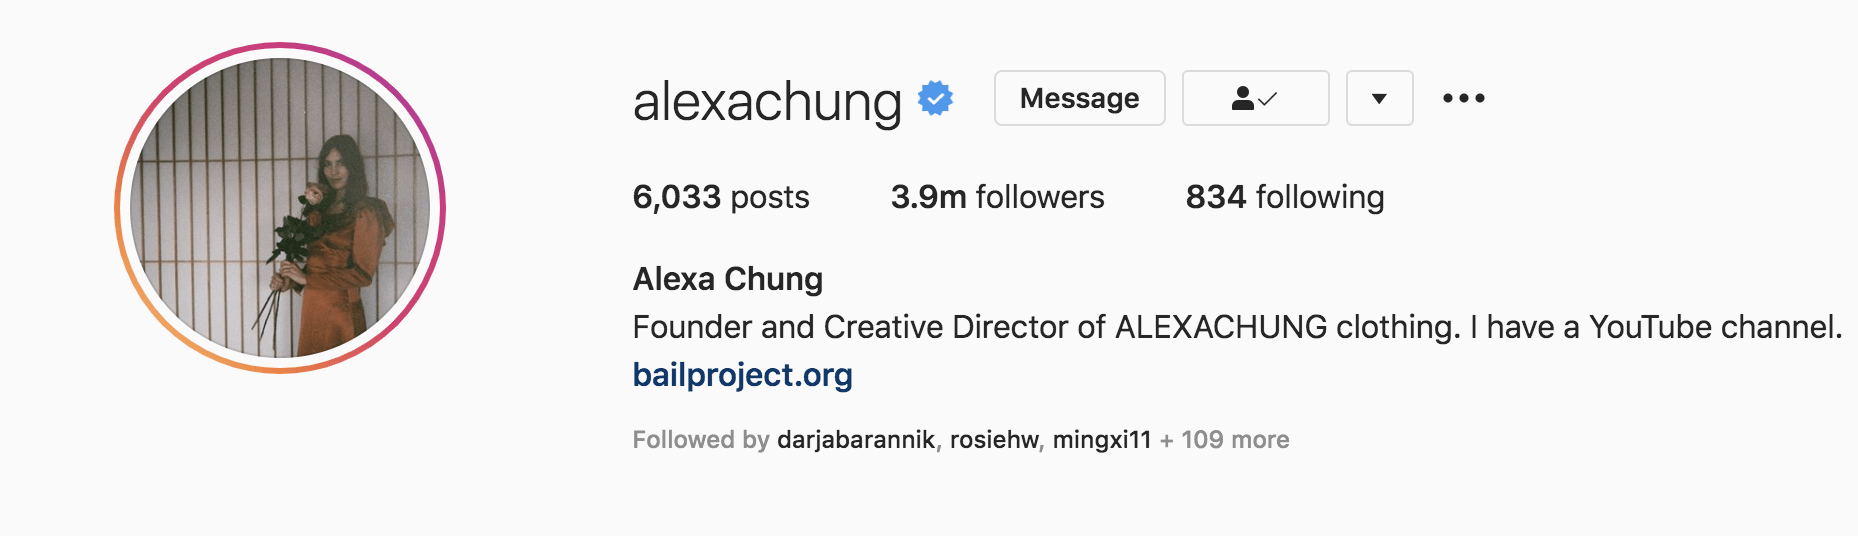 Top Fashion Influencers- Alexa Chung